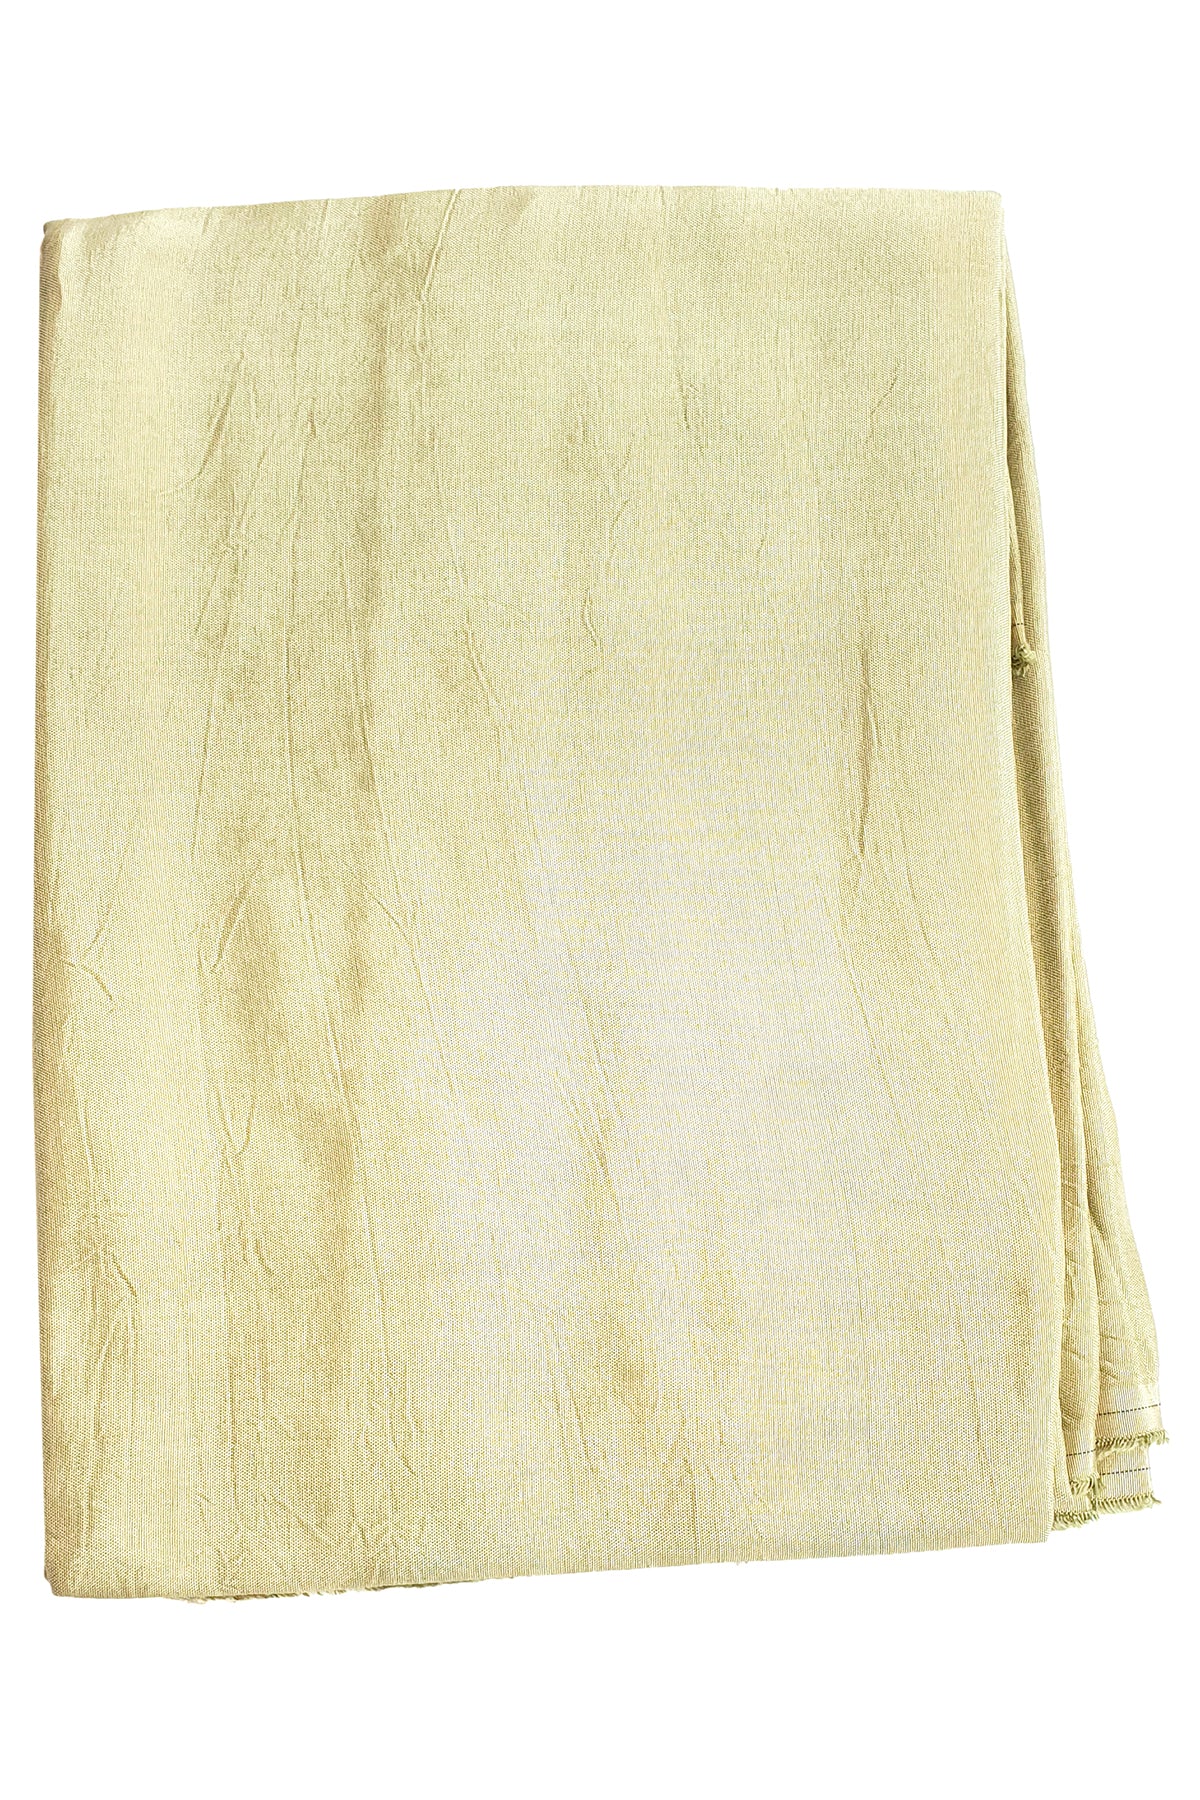 Pista Tissue Sequin and Zari Embroidered Unstitched Suit Set